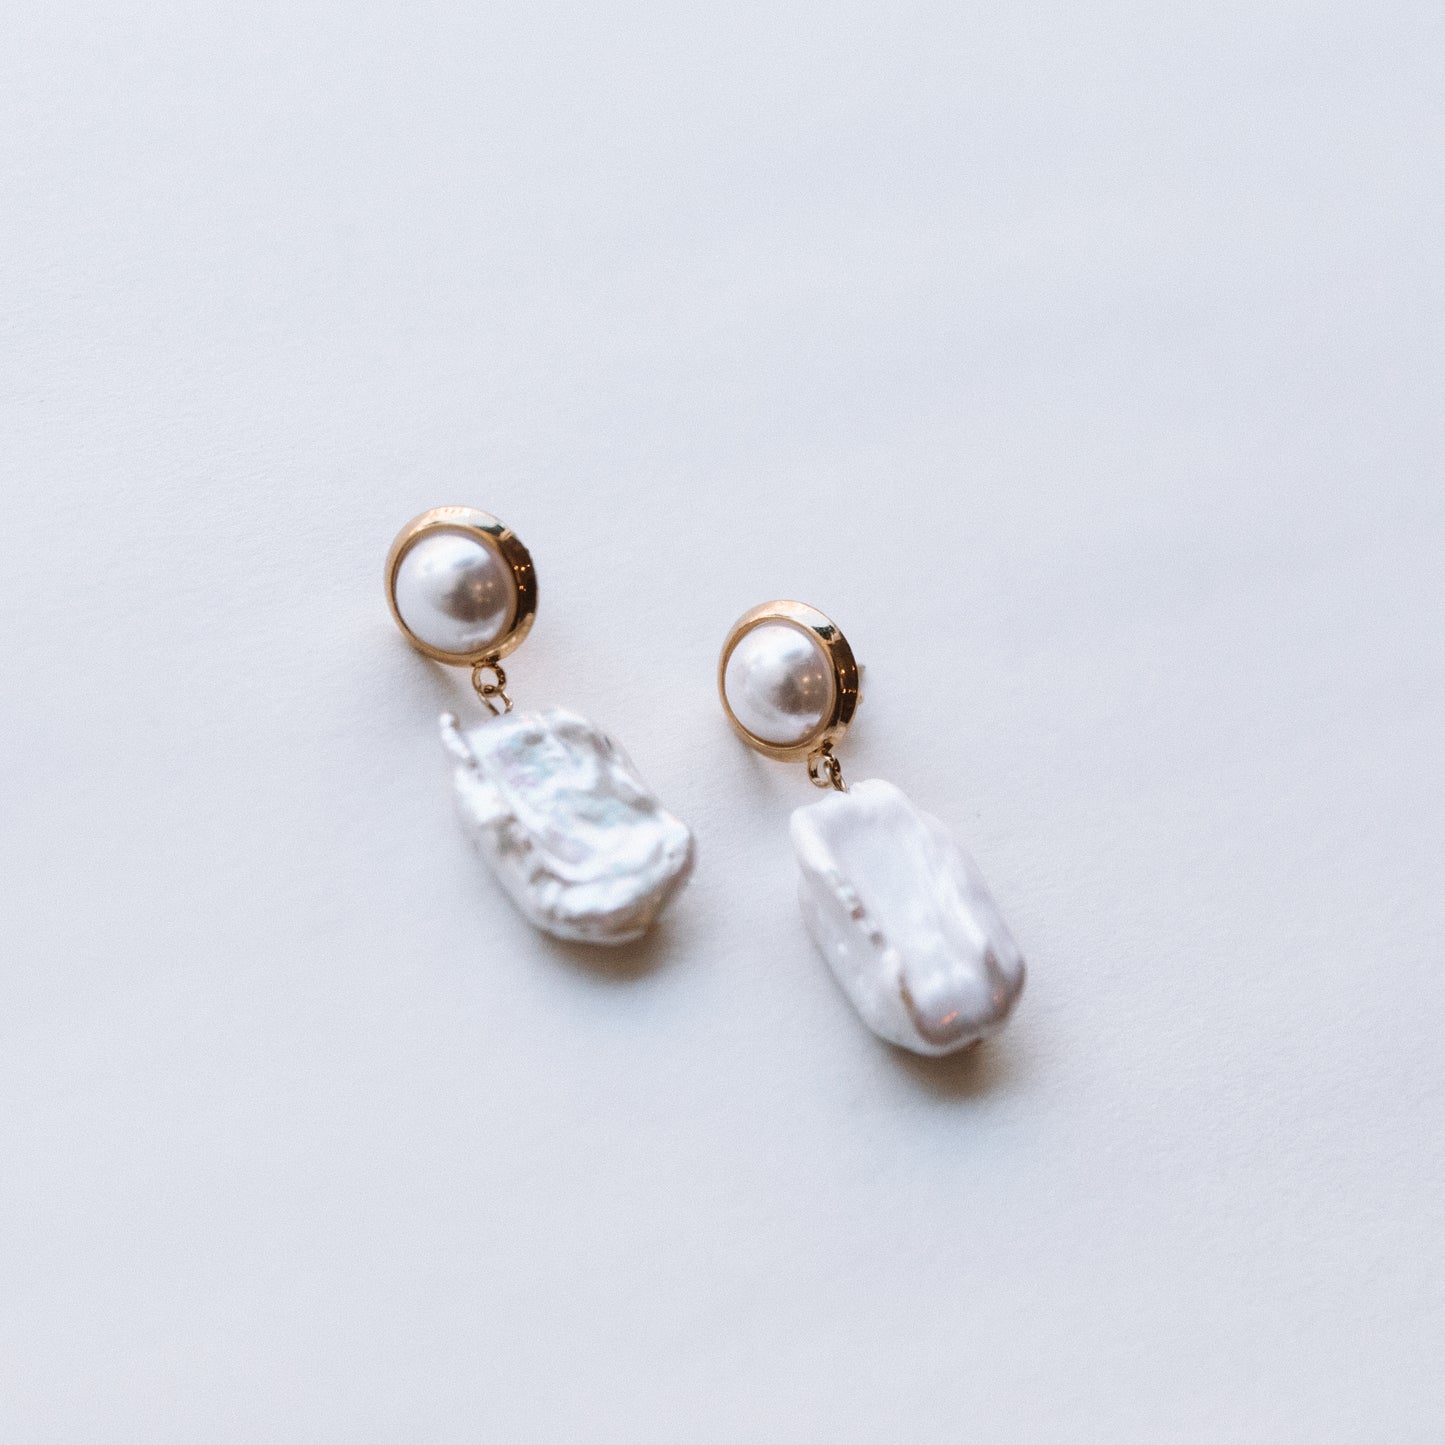 The Pearl Drop Earrings